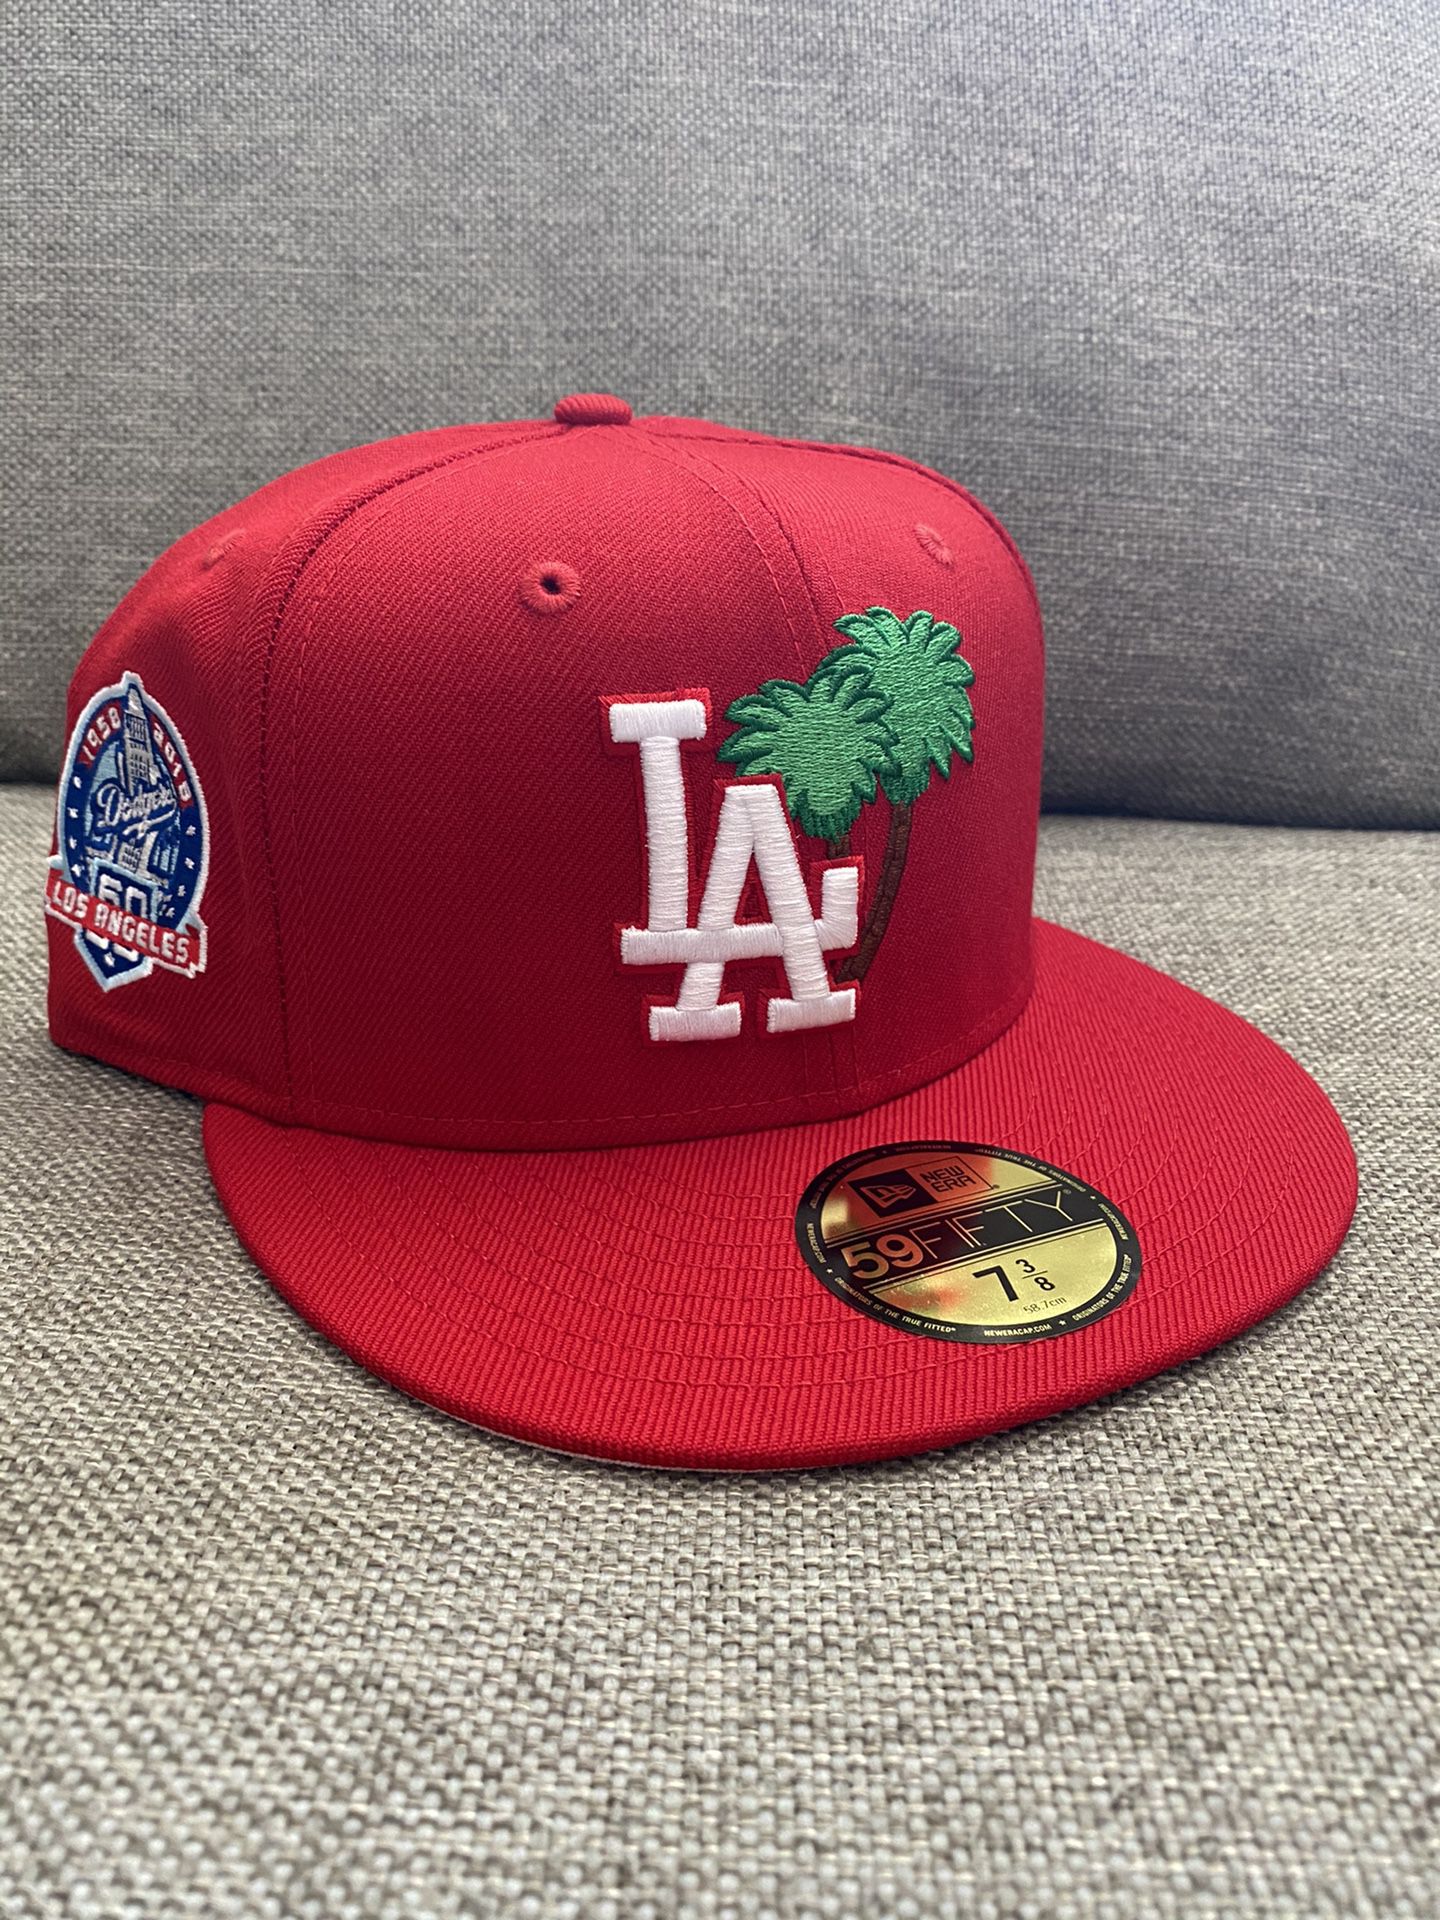 New Era Los Angeles Dodgers hat red pink undervisor palm tree hat sz 7 3/8 club